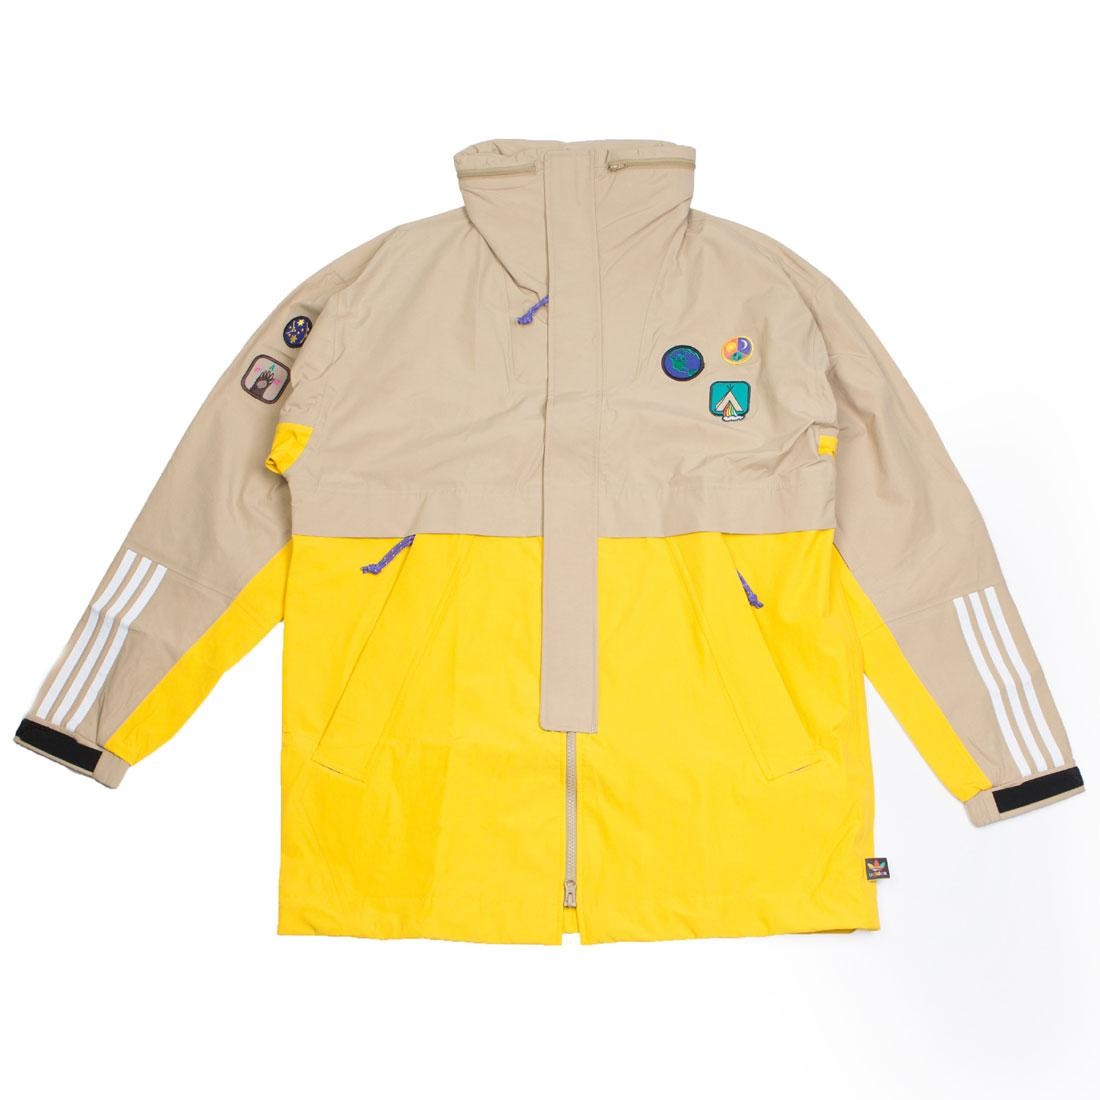 Adidas Pharrell Williams Men Hu Hiking 3-Layer Jacket beige hemp eqt yellow